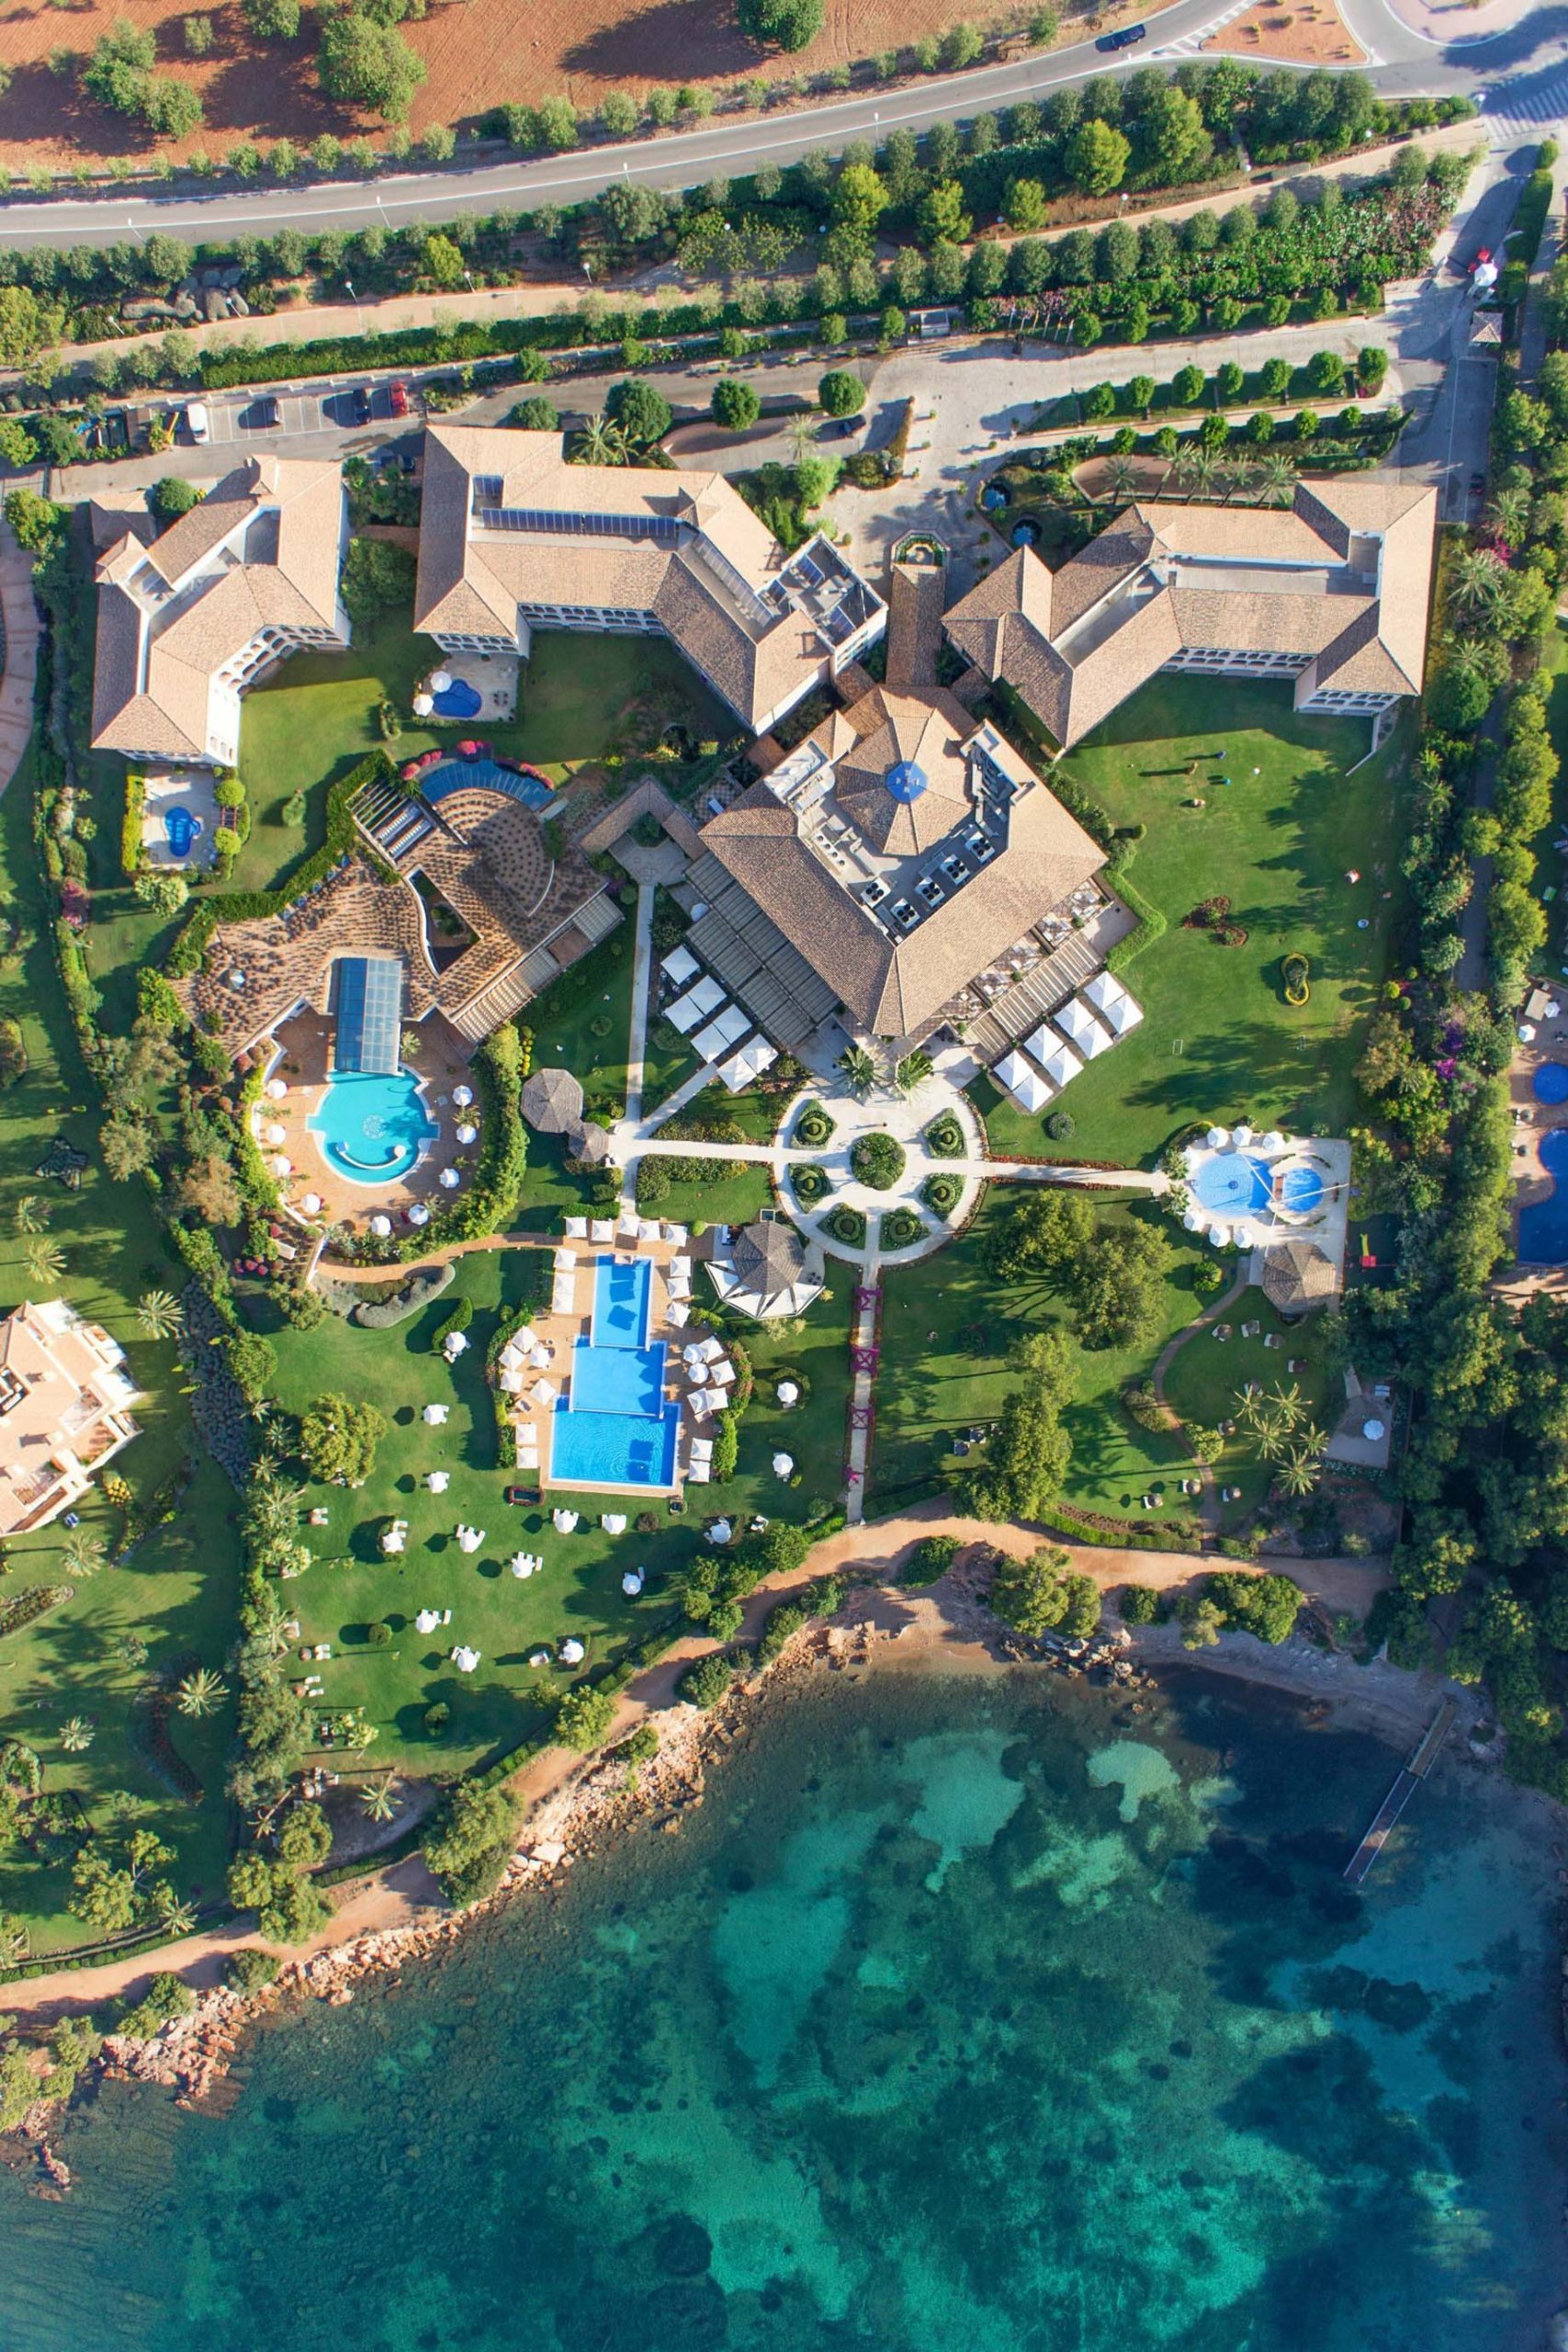 The St. Regis Mardavall Mallorca Resort - Palma de Mallorca, Spain - Resort Overhead Aerial